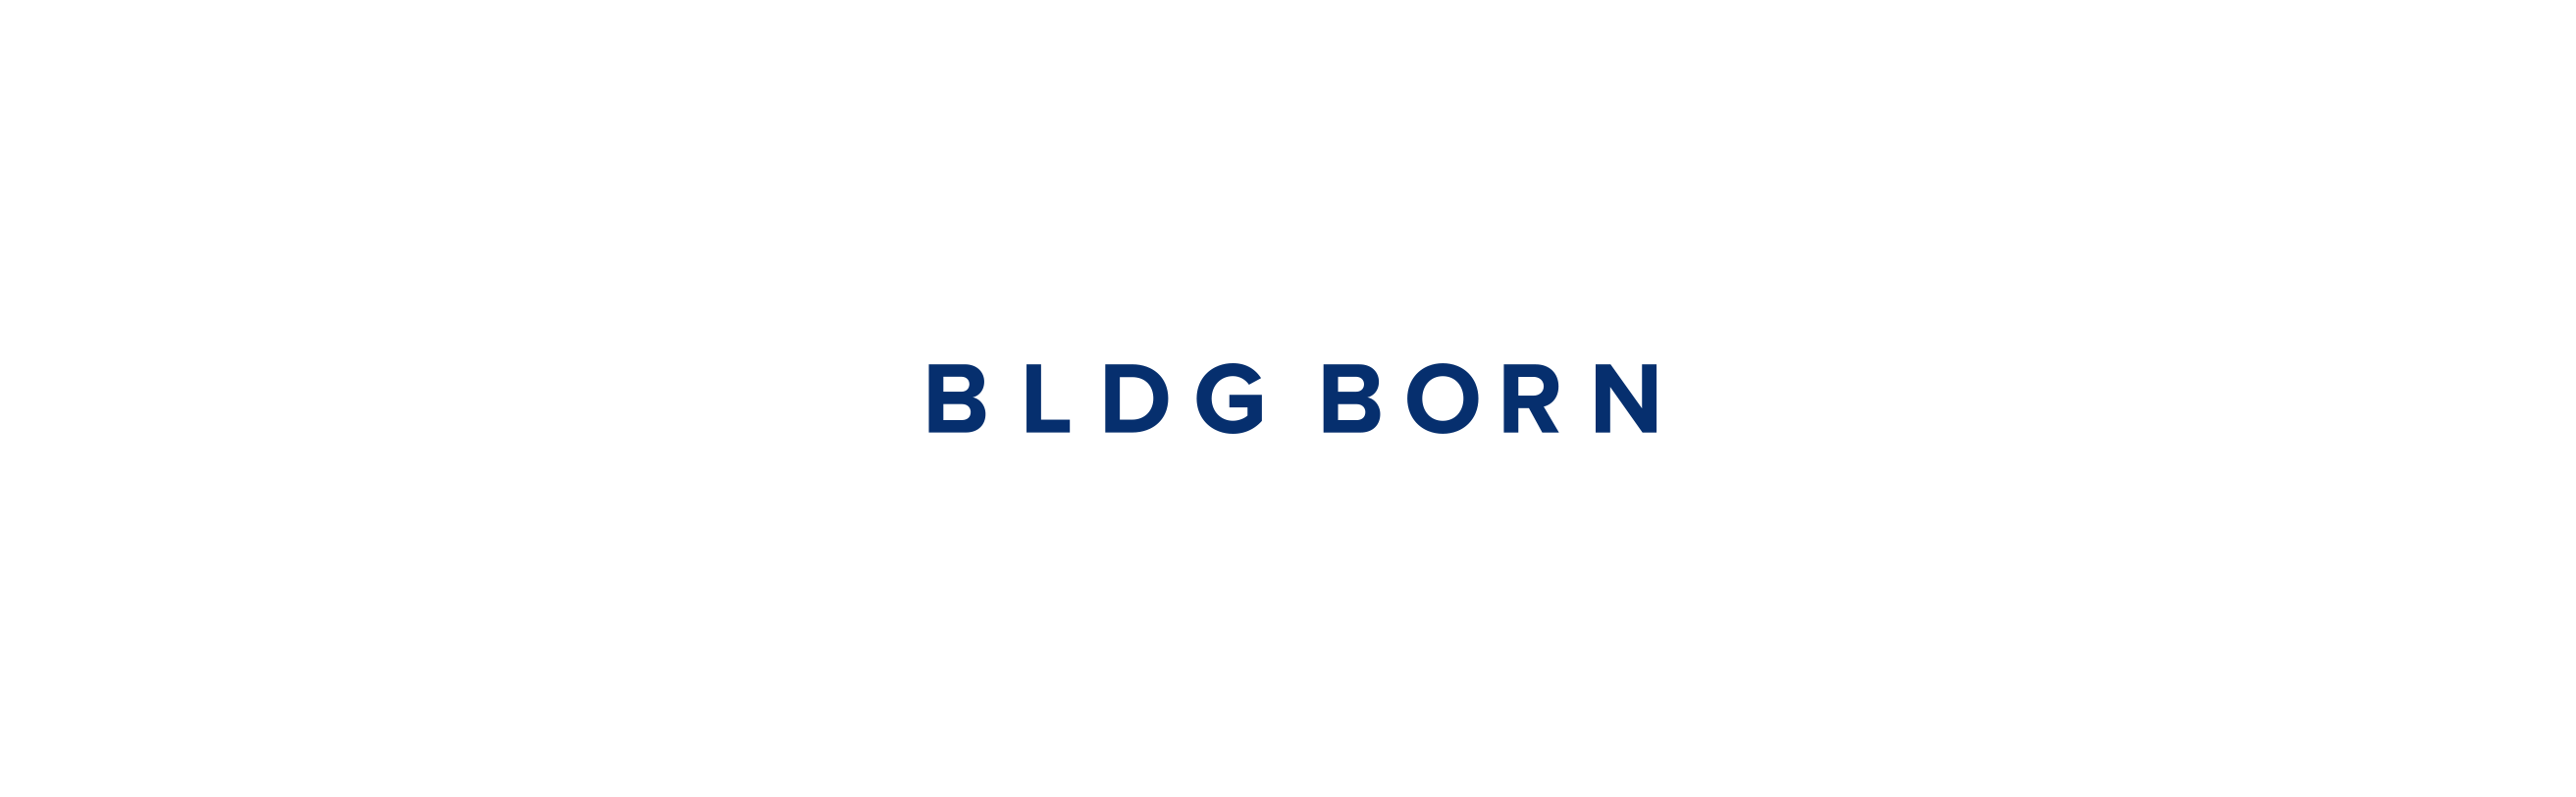 BLDG-BRN-secondary